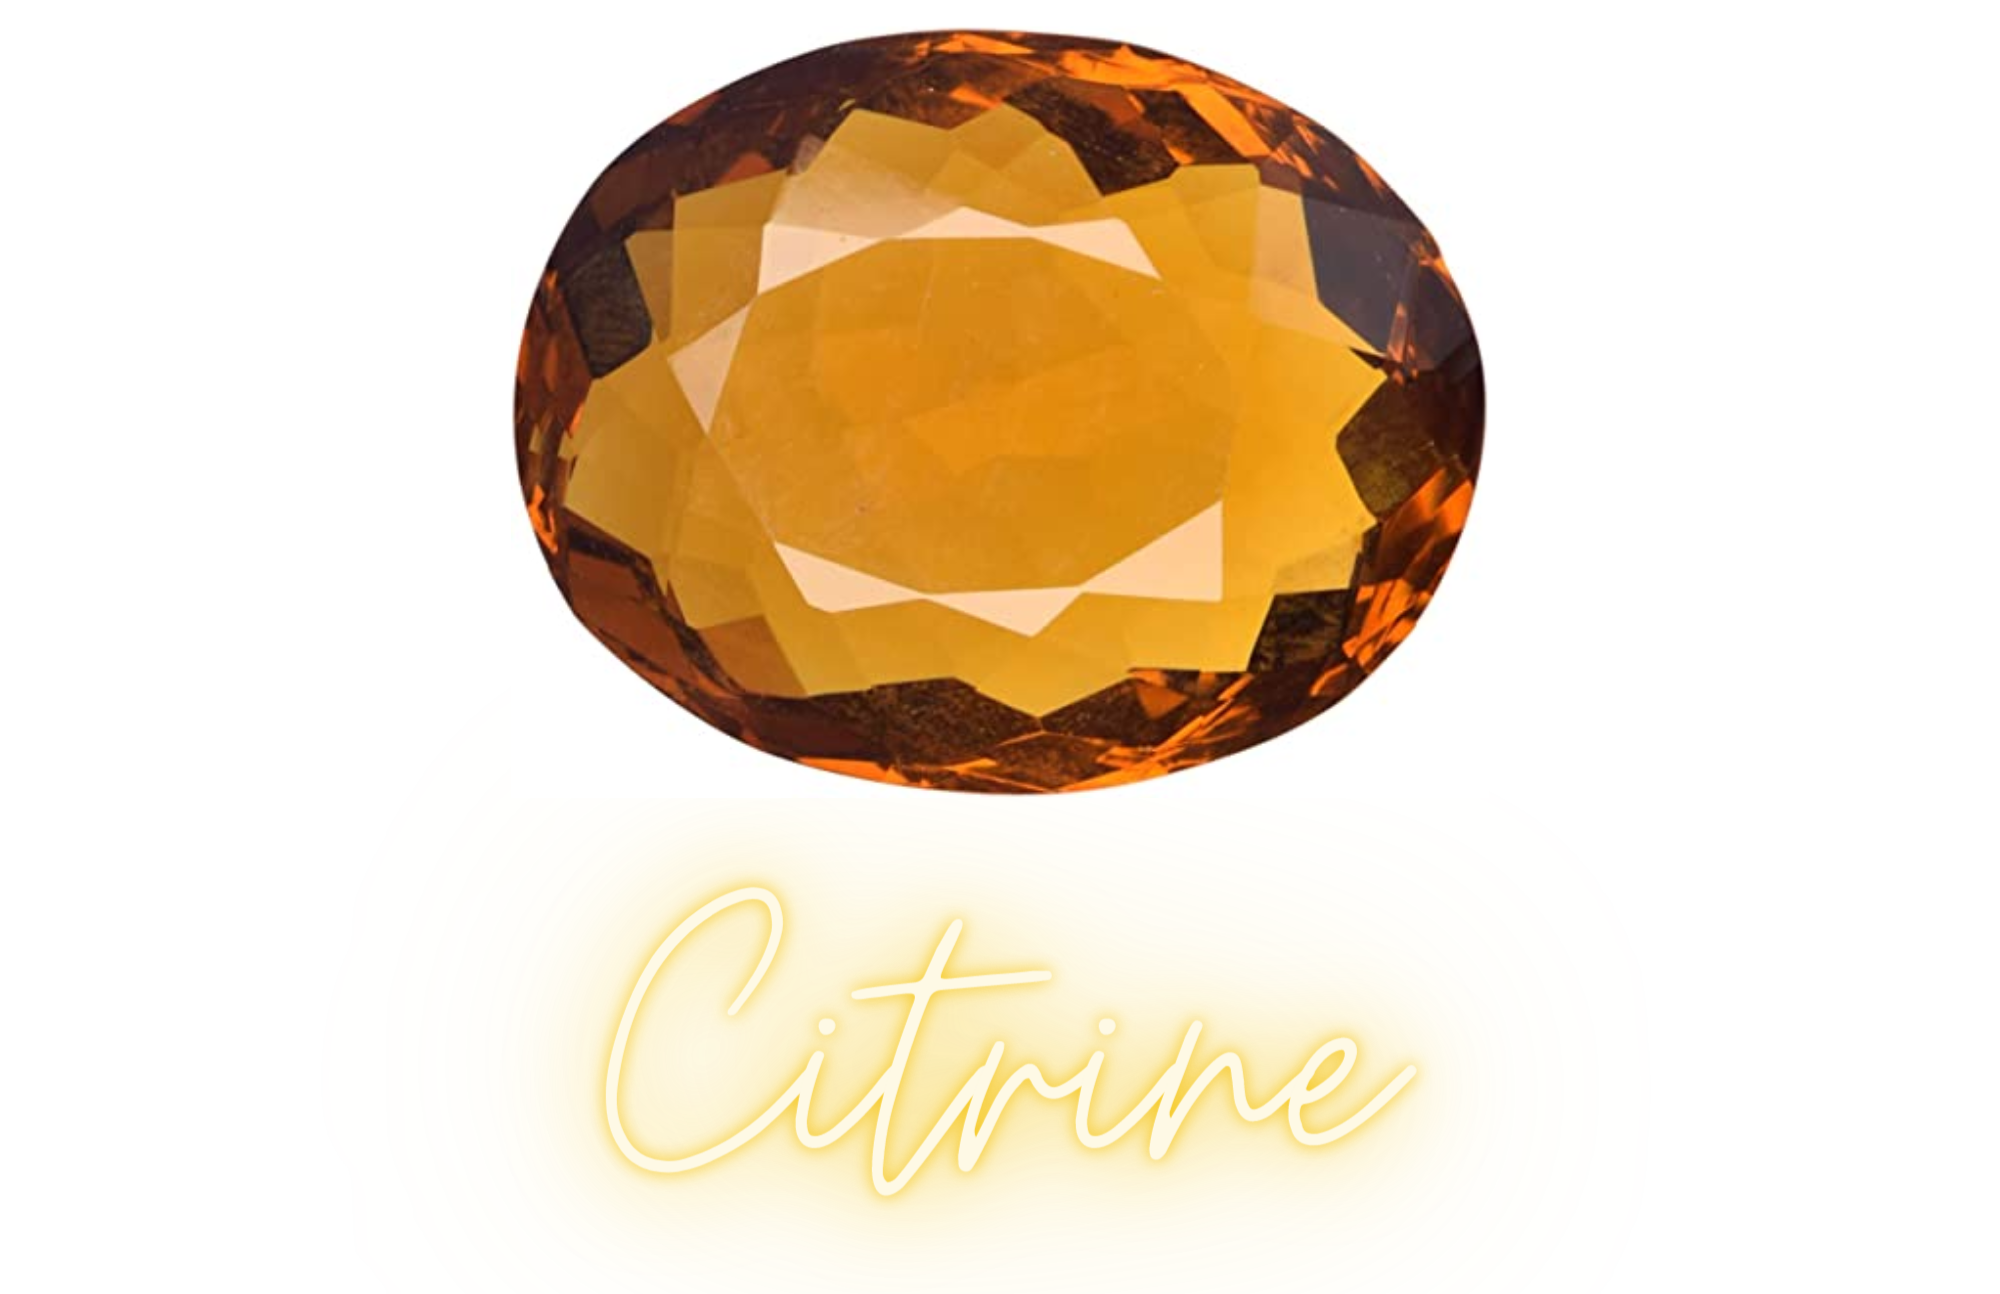 An oblong yellow-orange Citrine stone